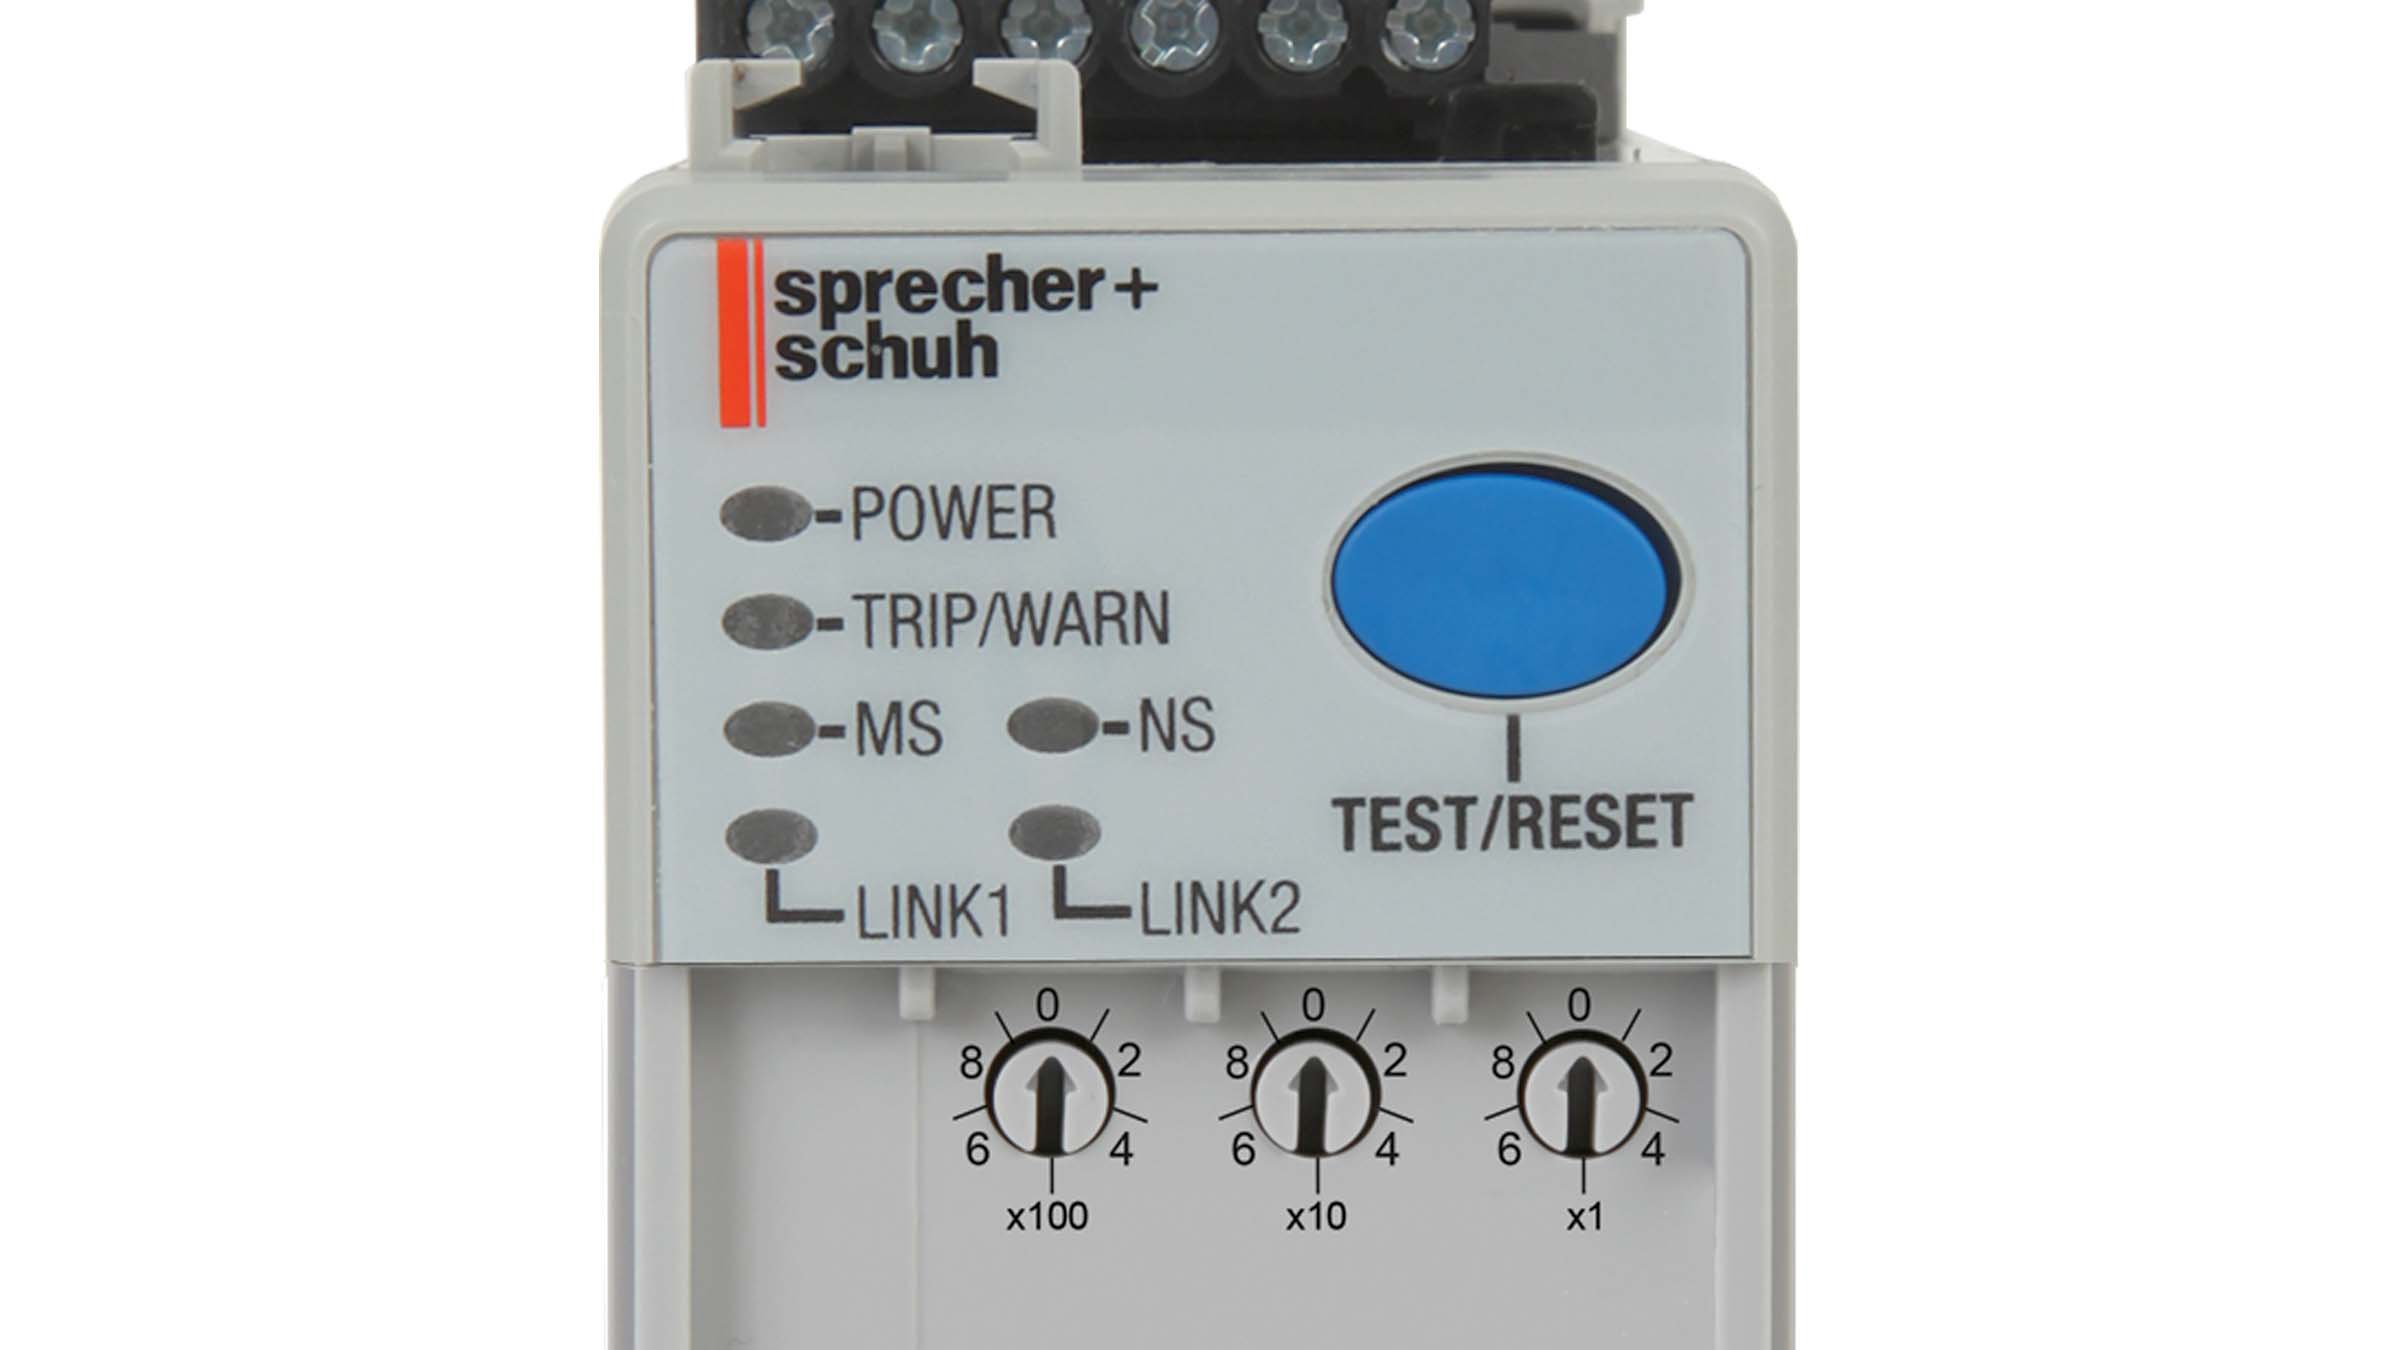 Sprecher & Schuh Series CEP9 Ethernet module settings